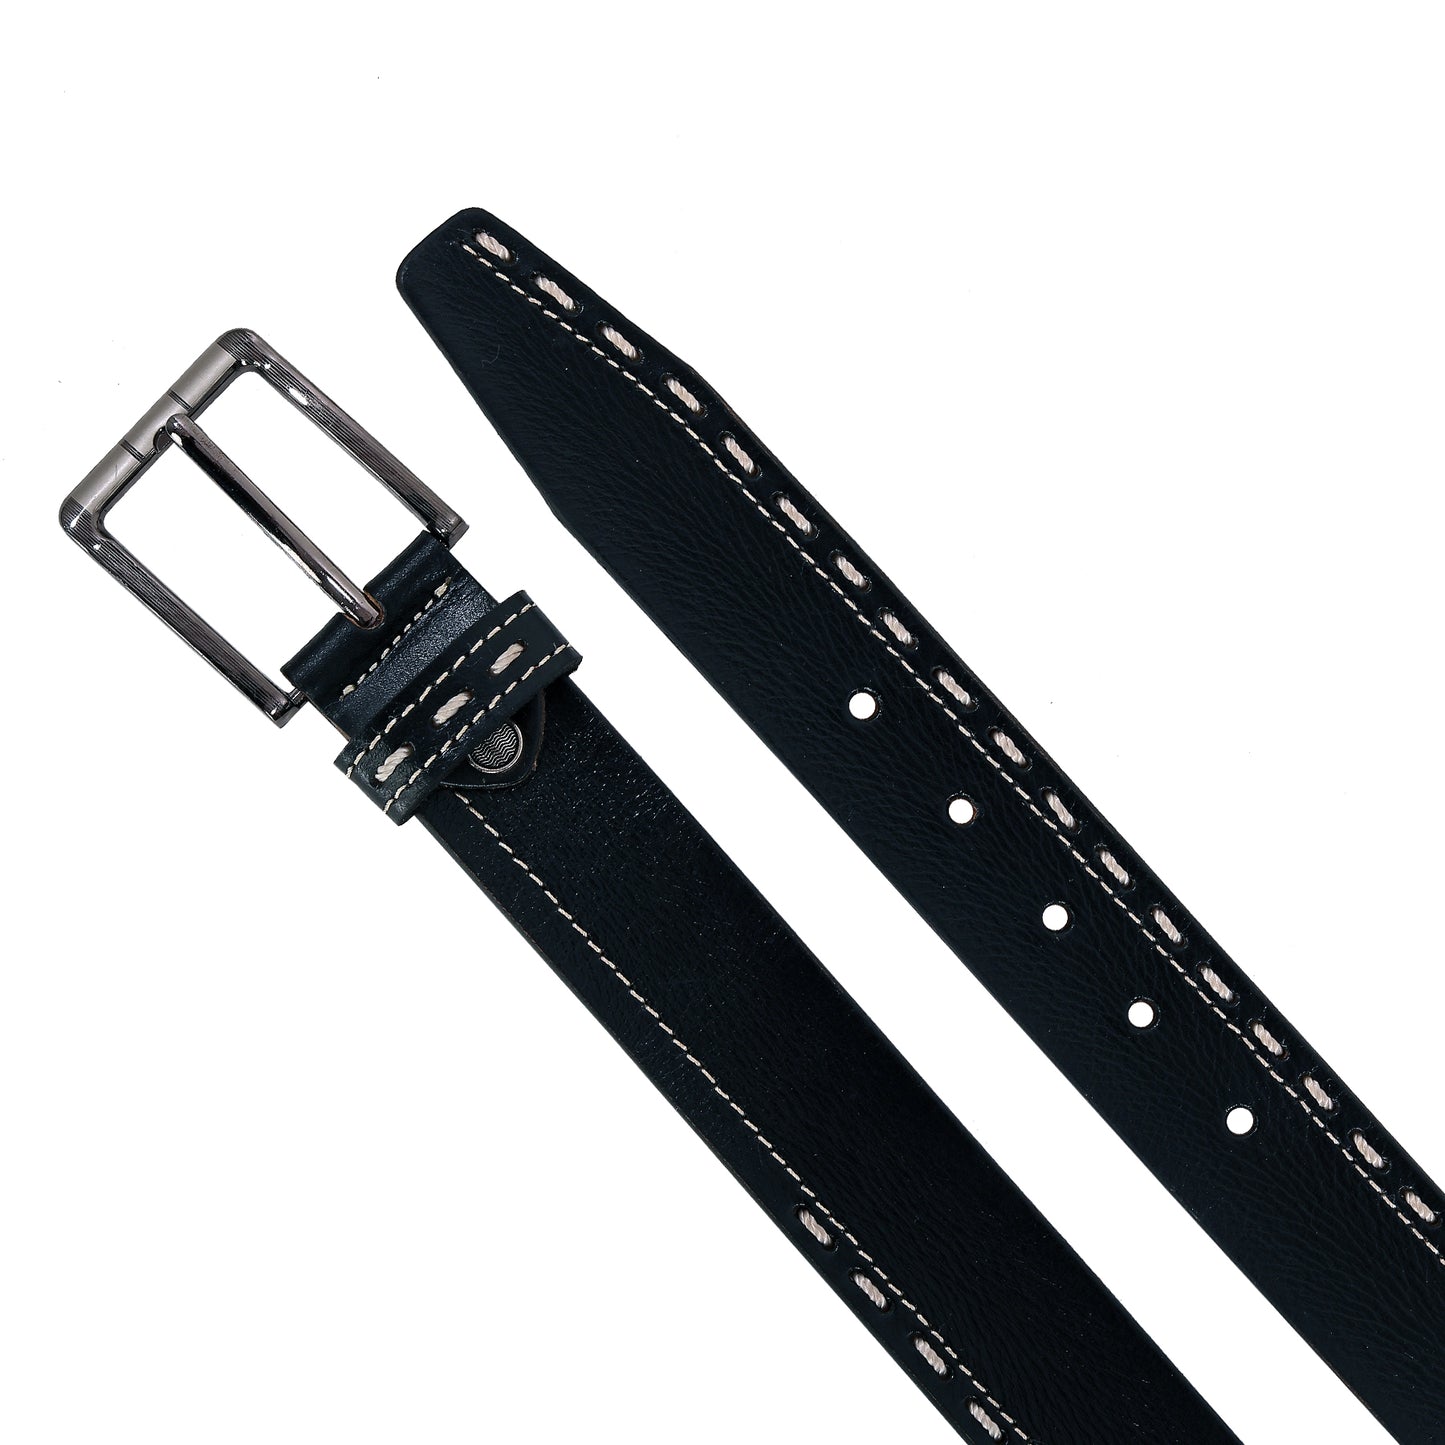 Leather World Pin Lock Buckle Genuine Leather Formal Casual Black Belt For Men Elegant Gift Box